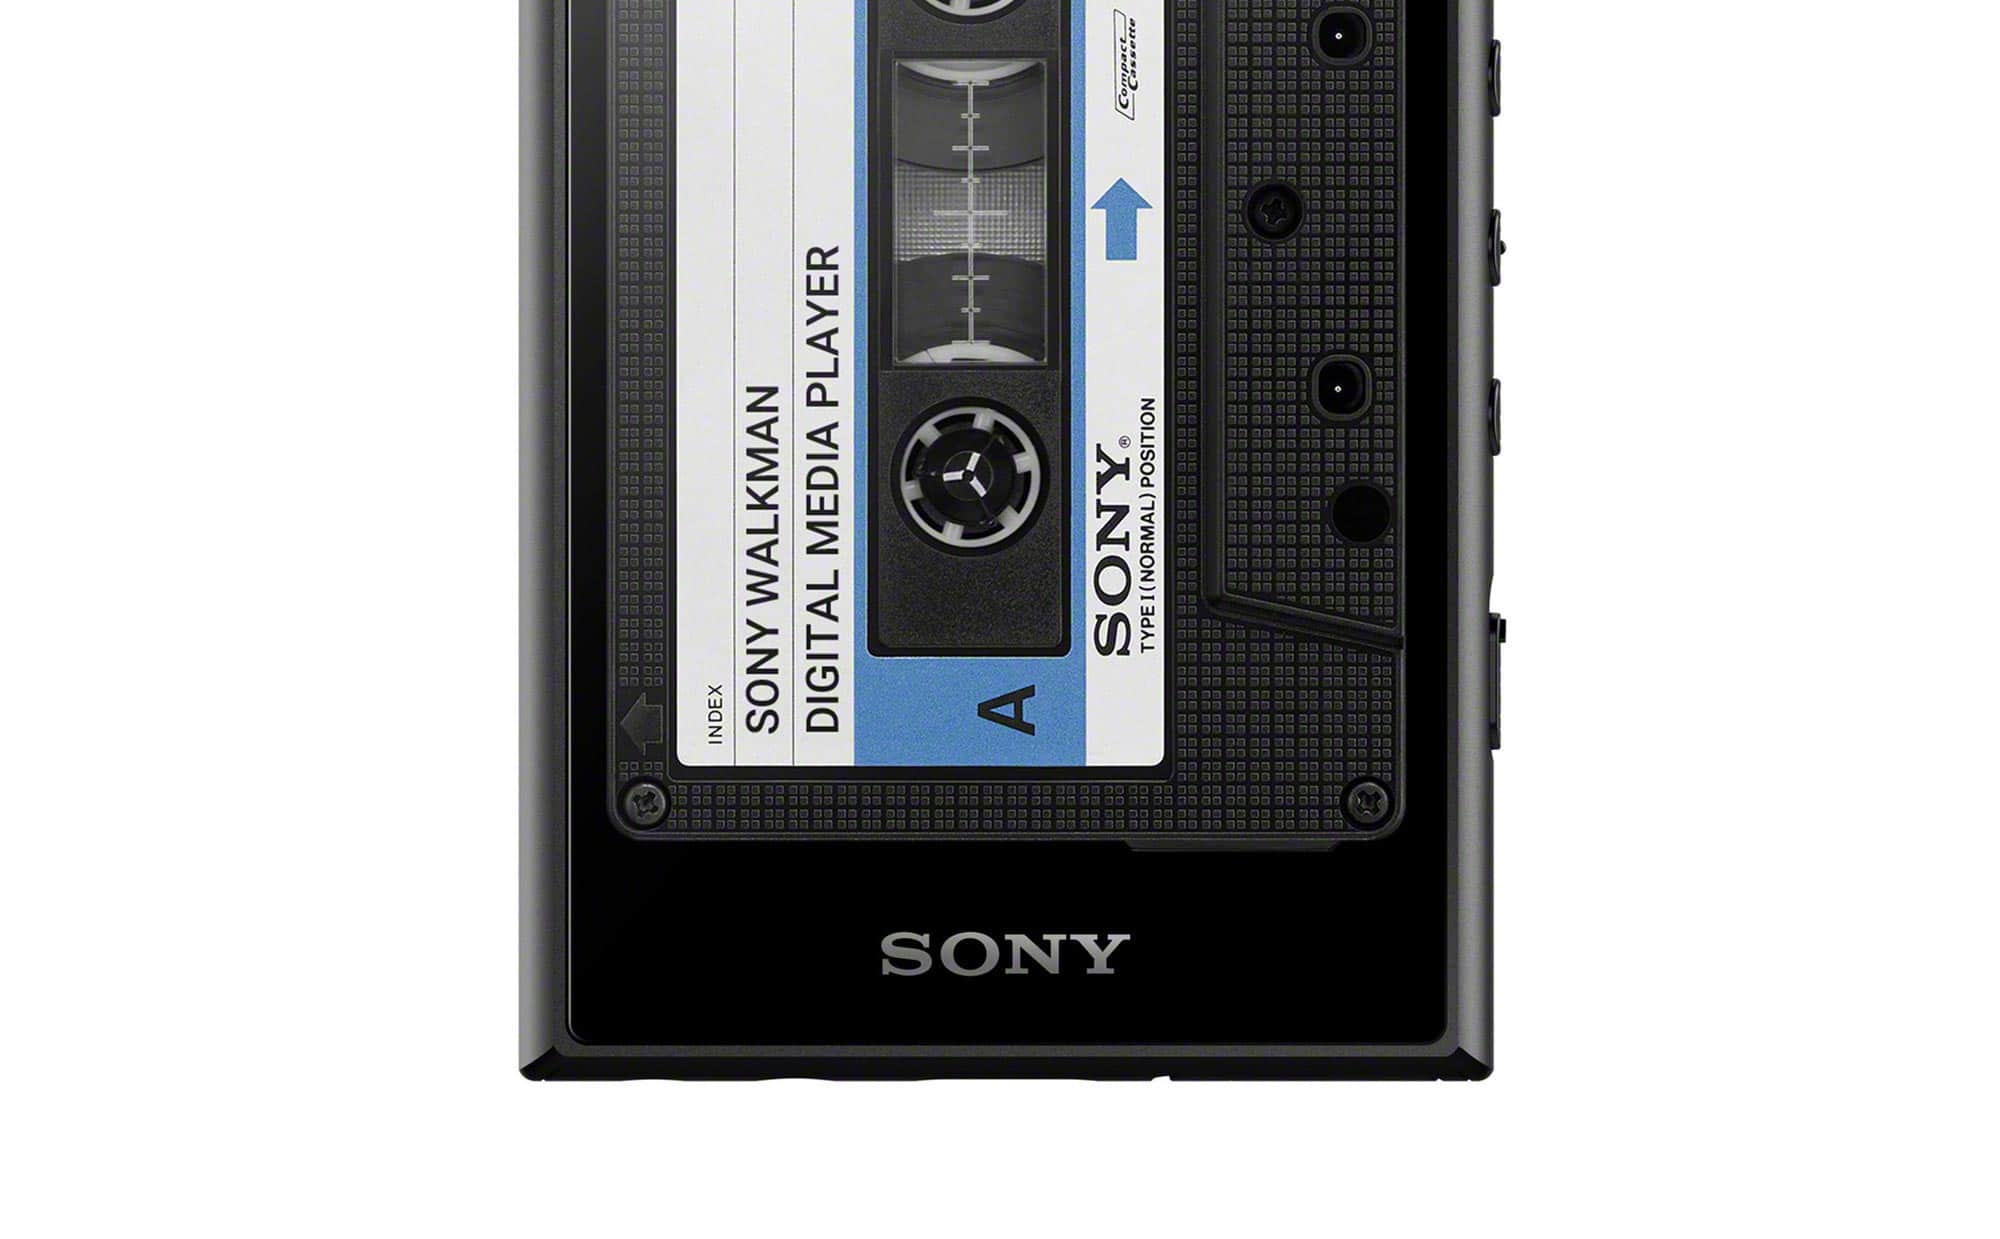 Sony Walkman 40th anniversary edition